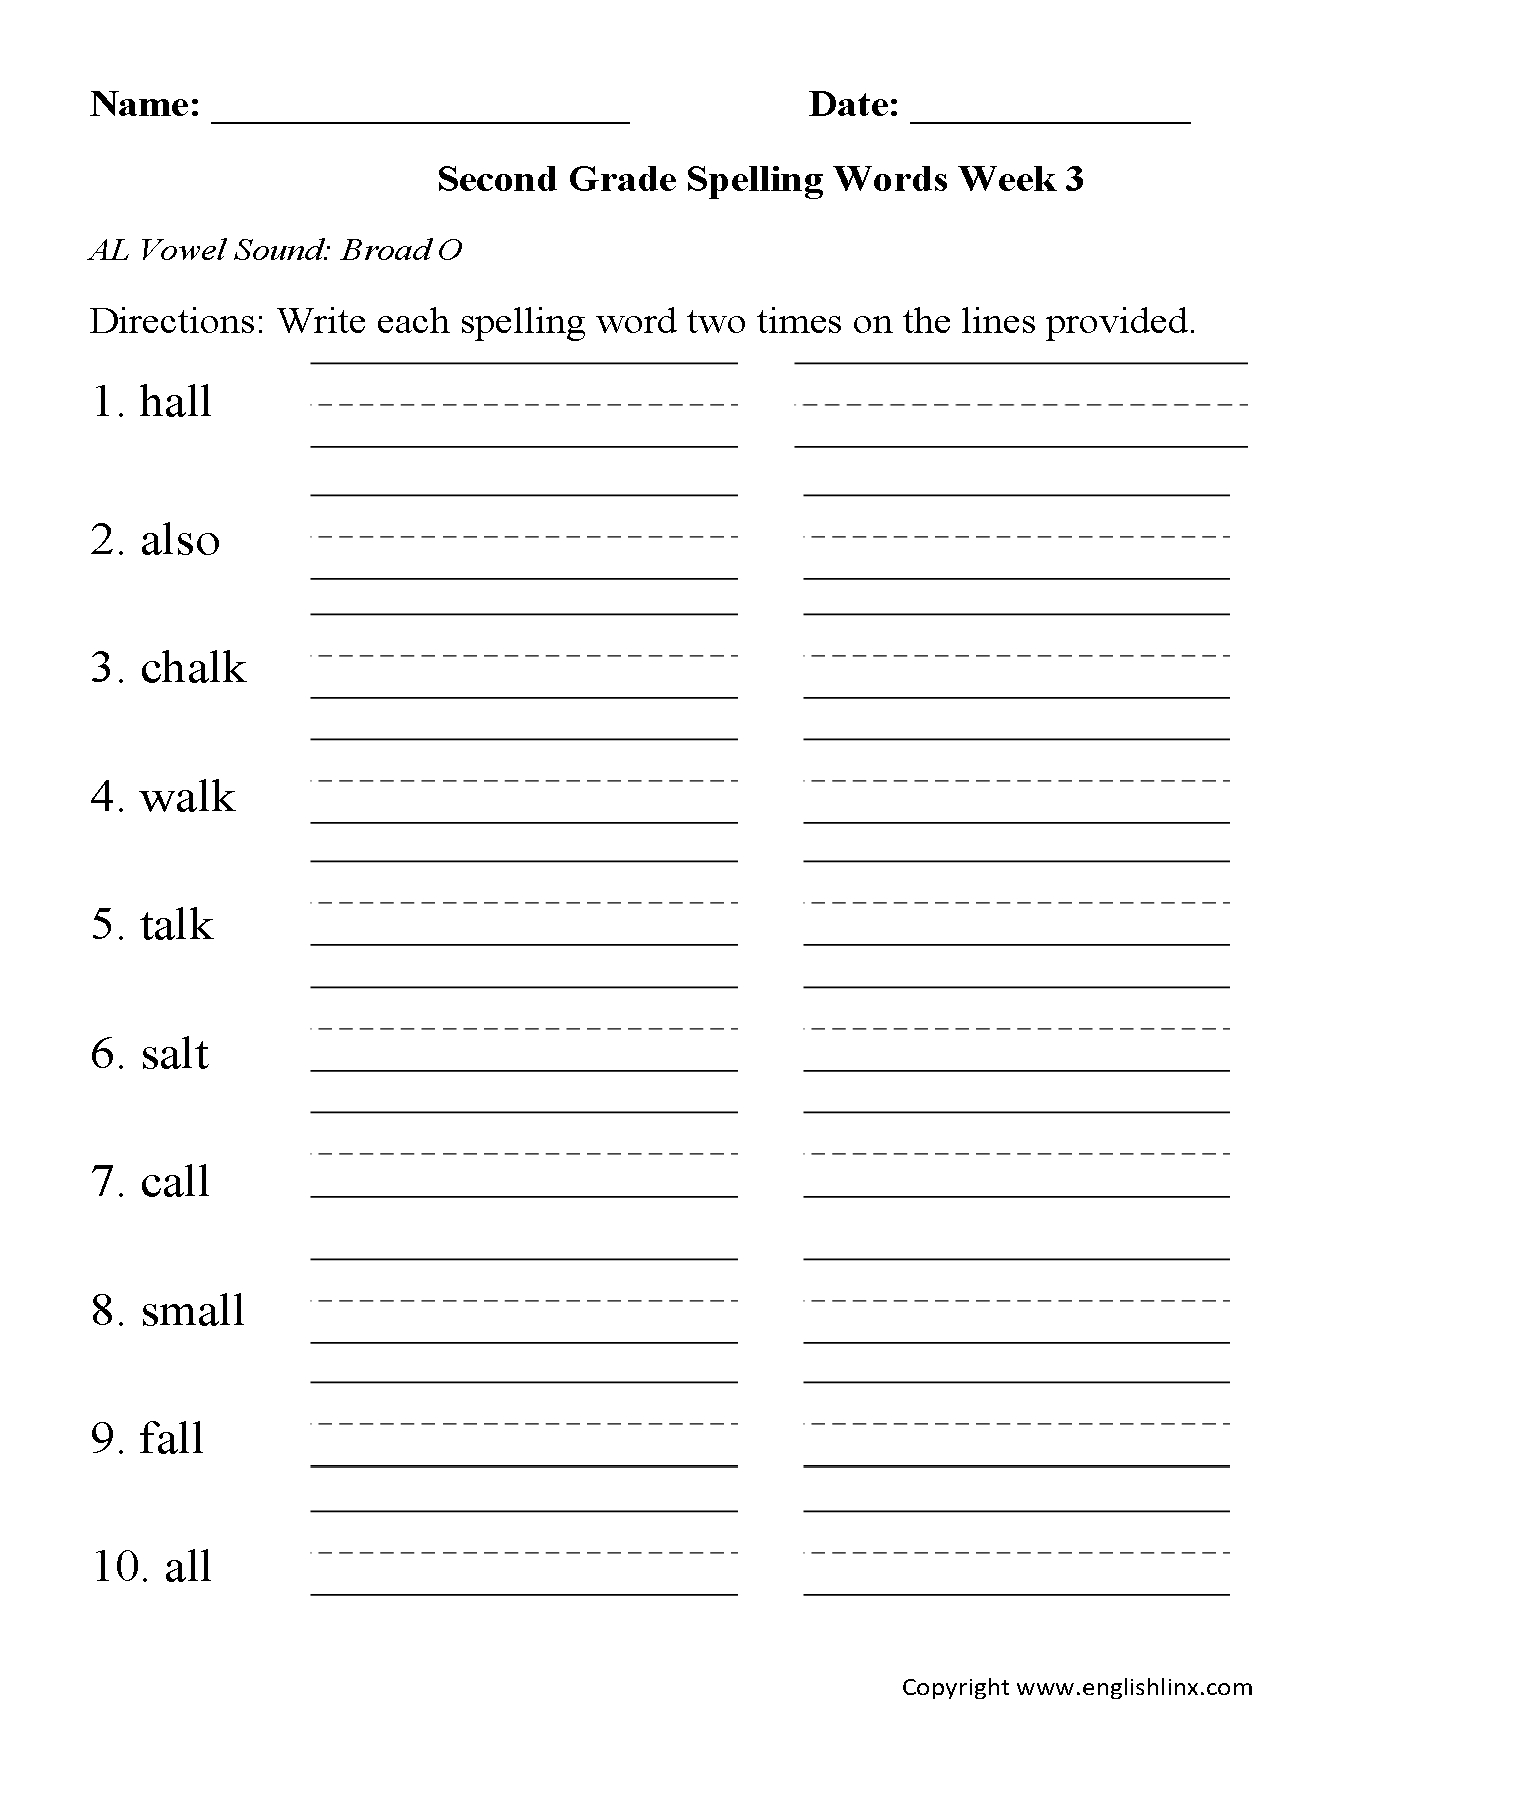 English Worksheets | Spelling Worksheets - Free Printable Spelling Worksheets For Adults